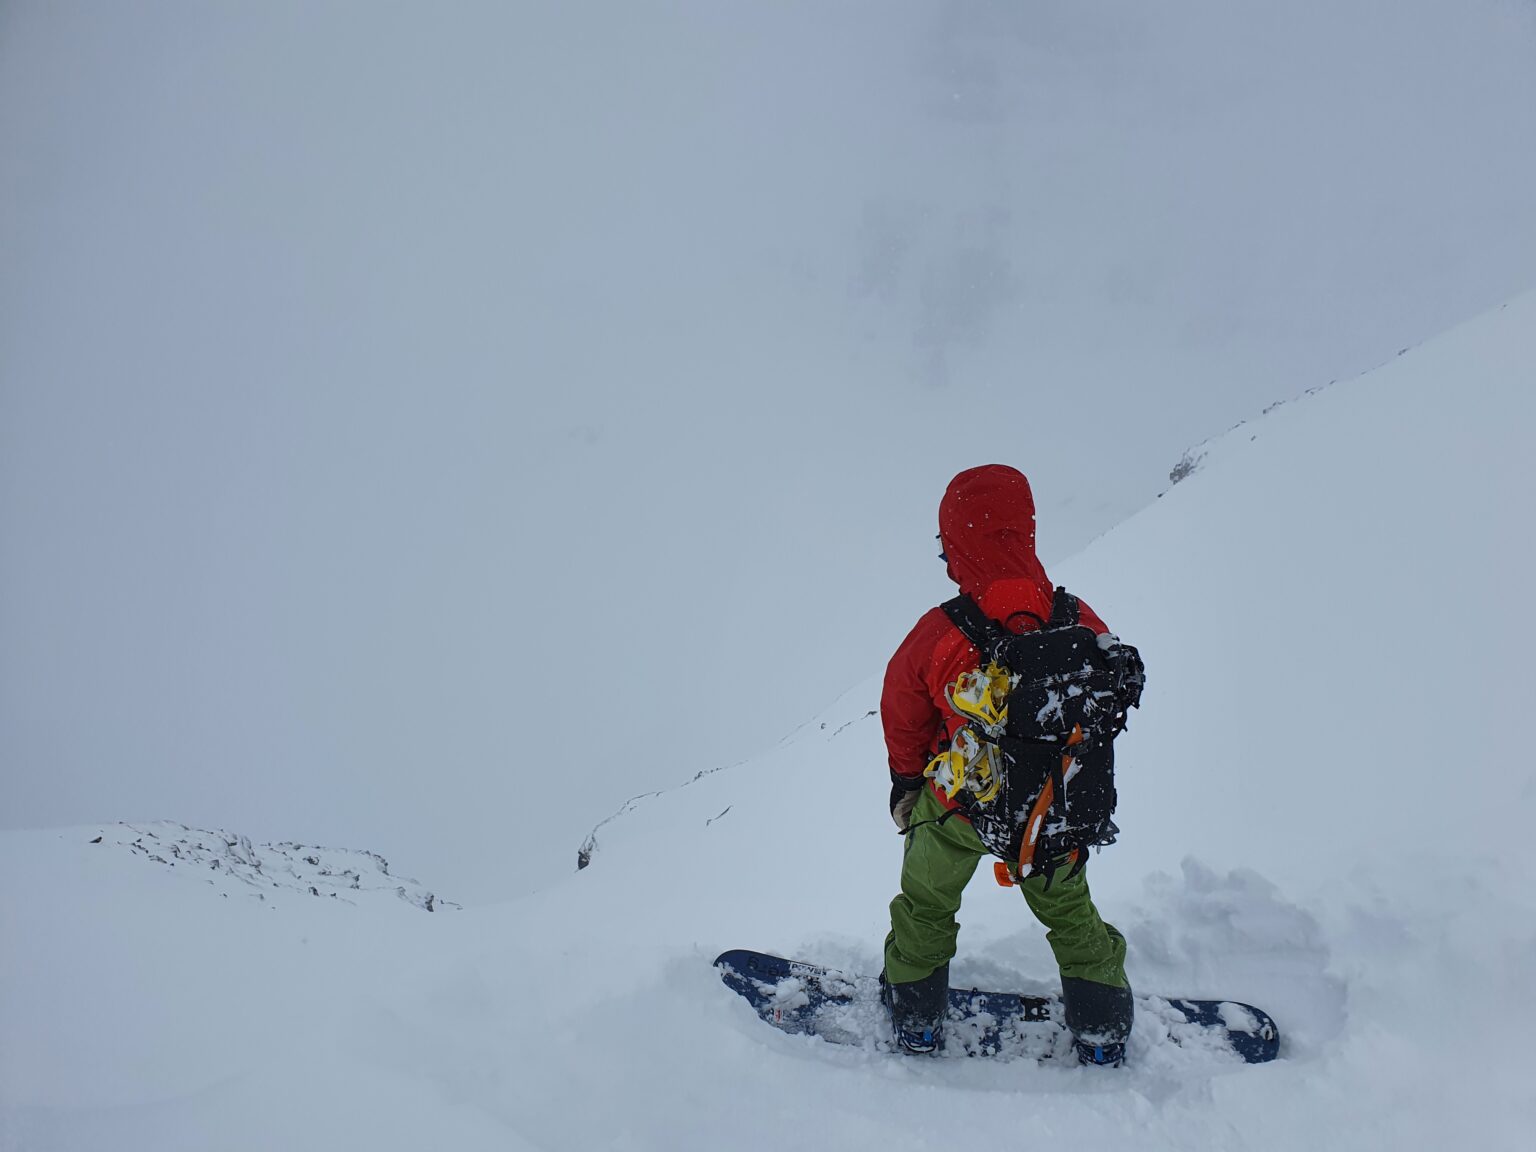 Preparing to snowboard down the West chute of Sjufjellet in the Tamokdalen Backcountry